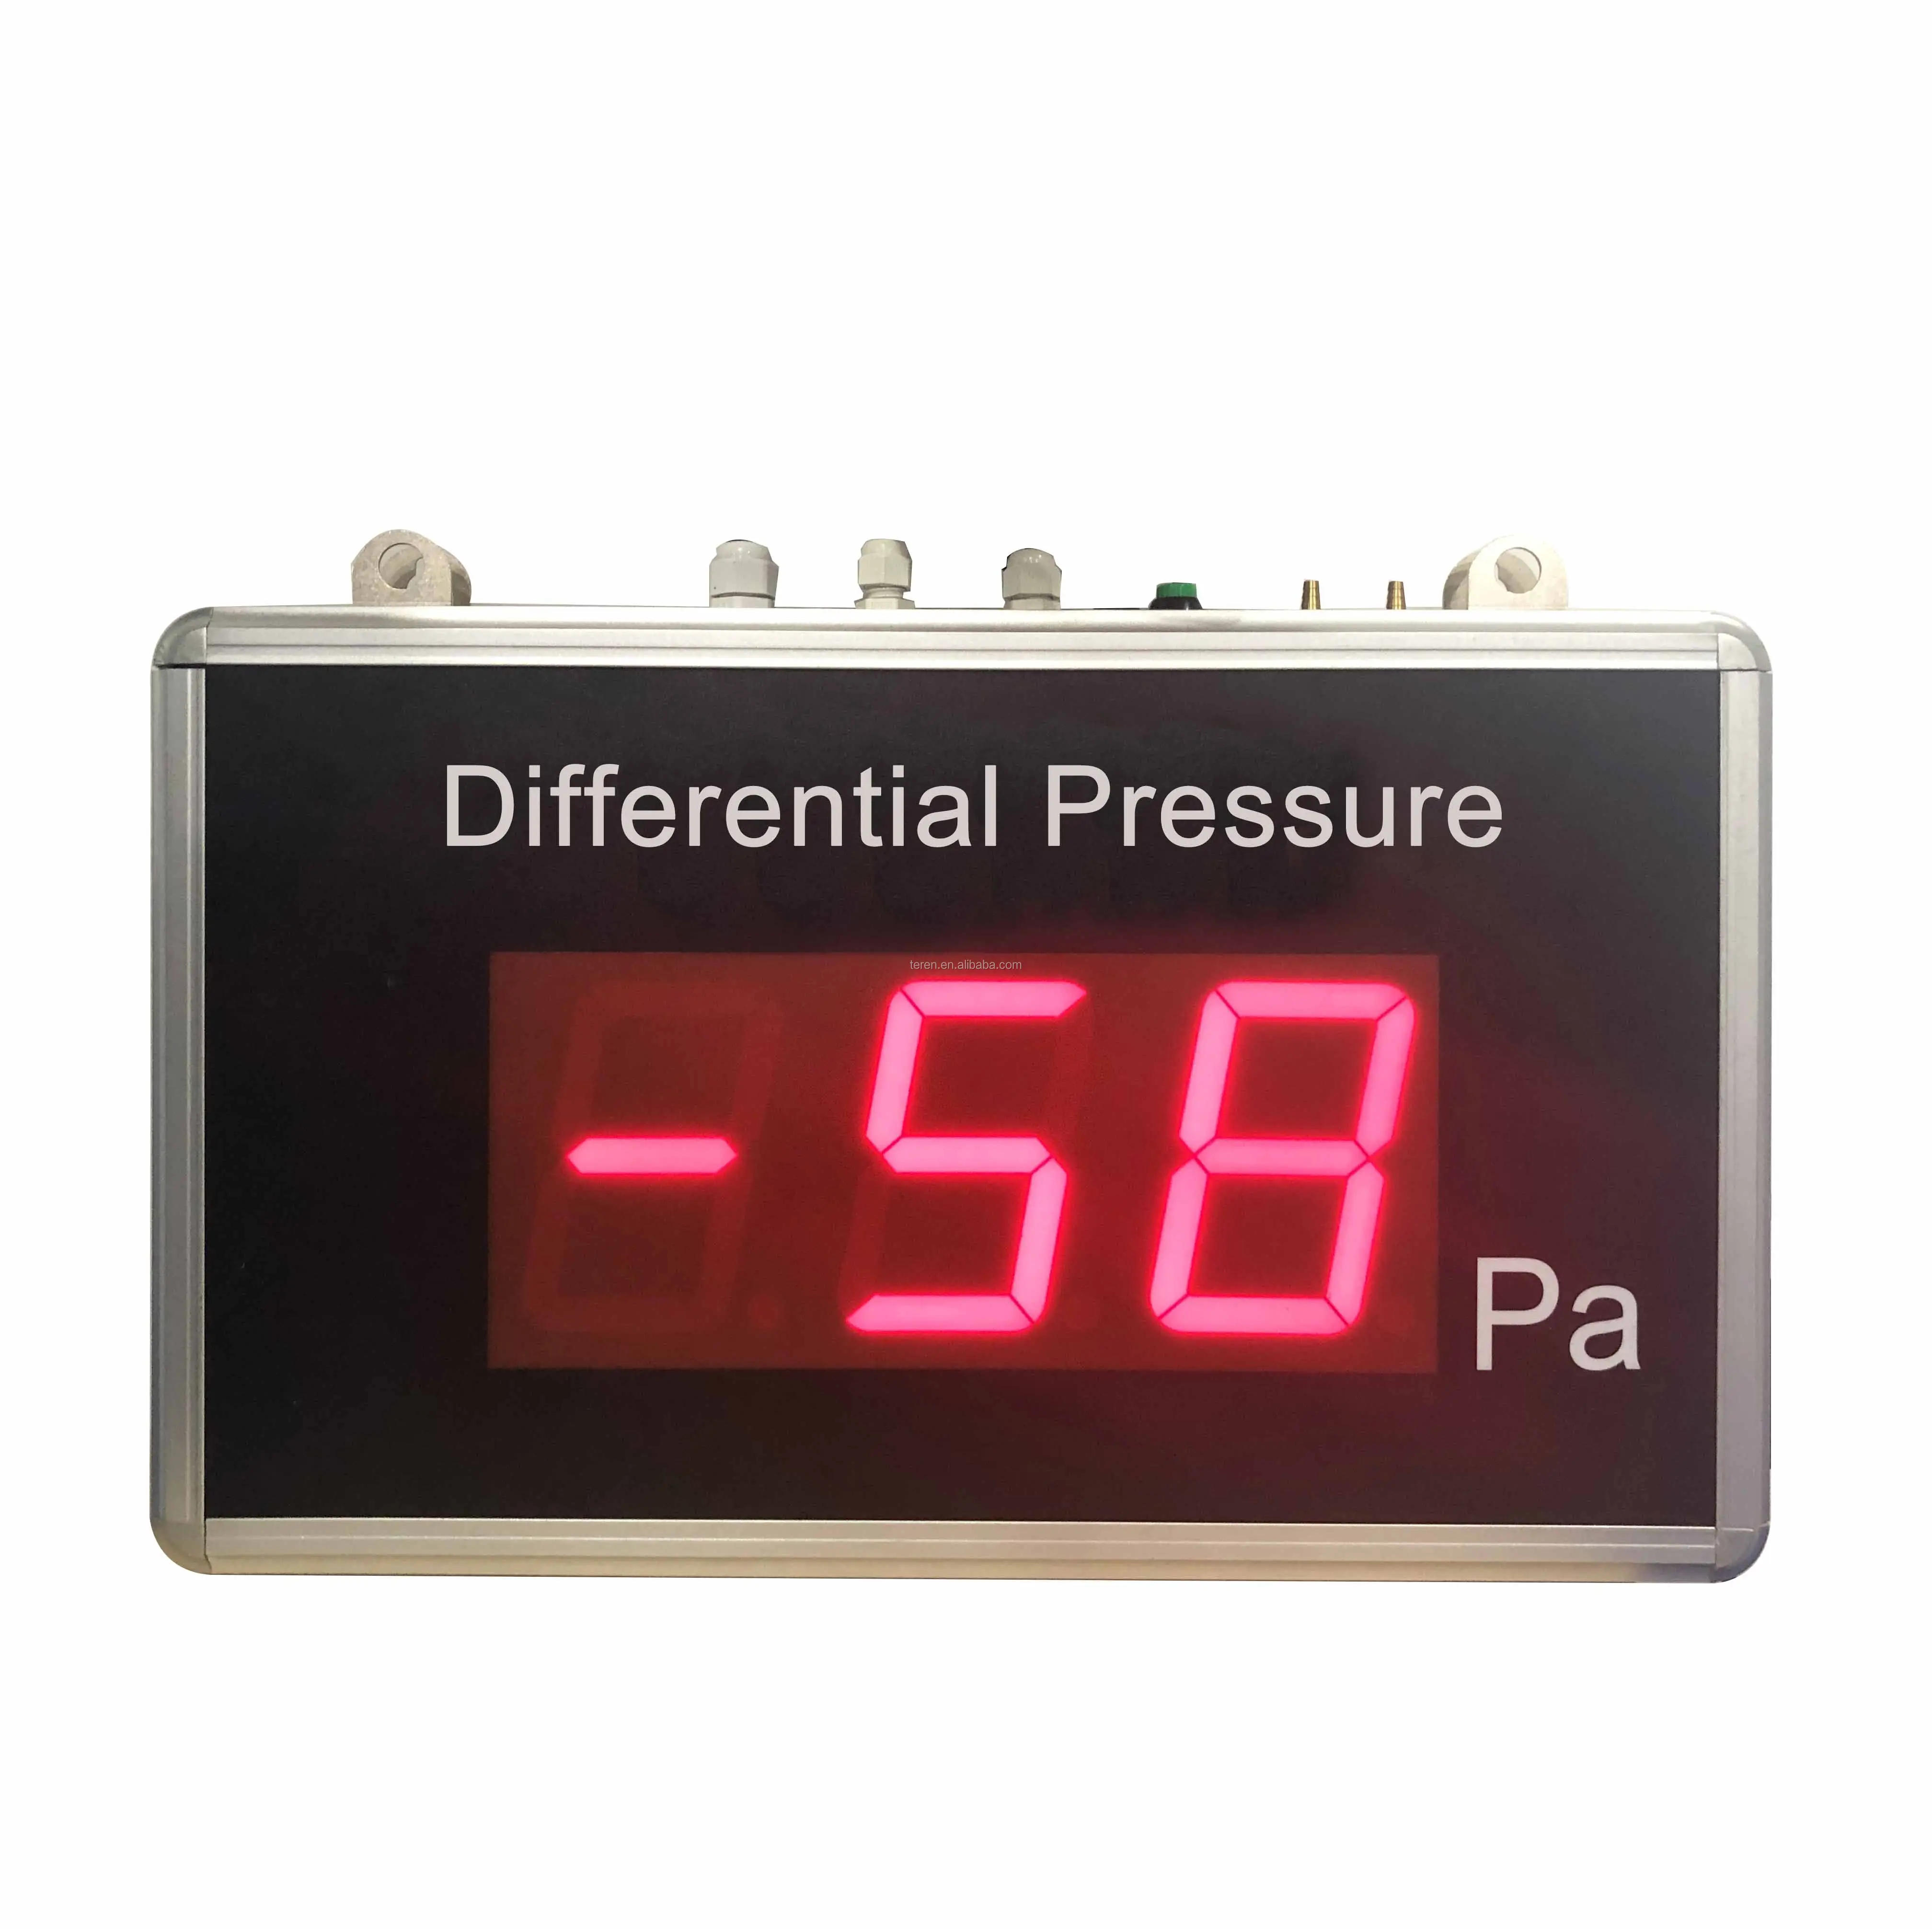 Large LED differential pressure display